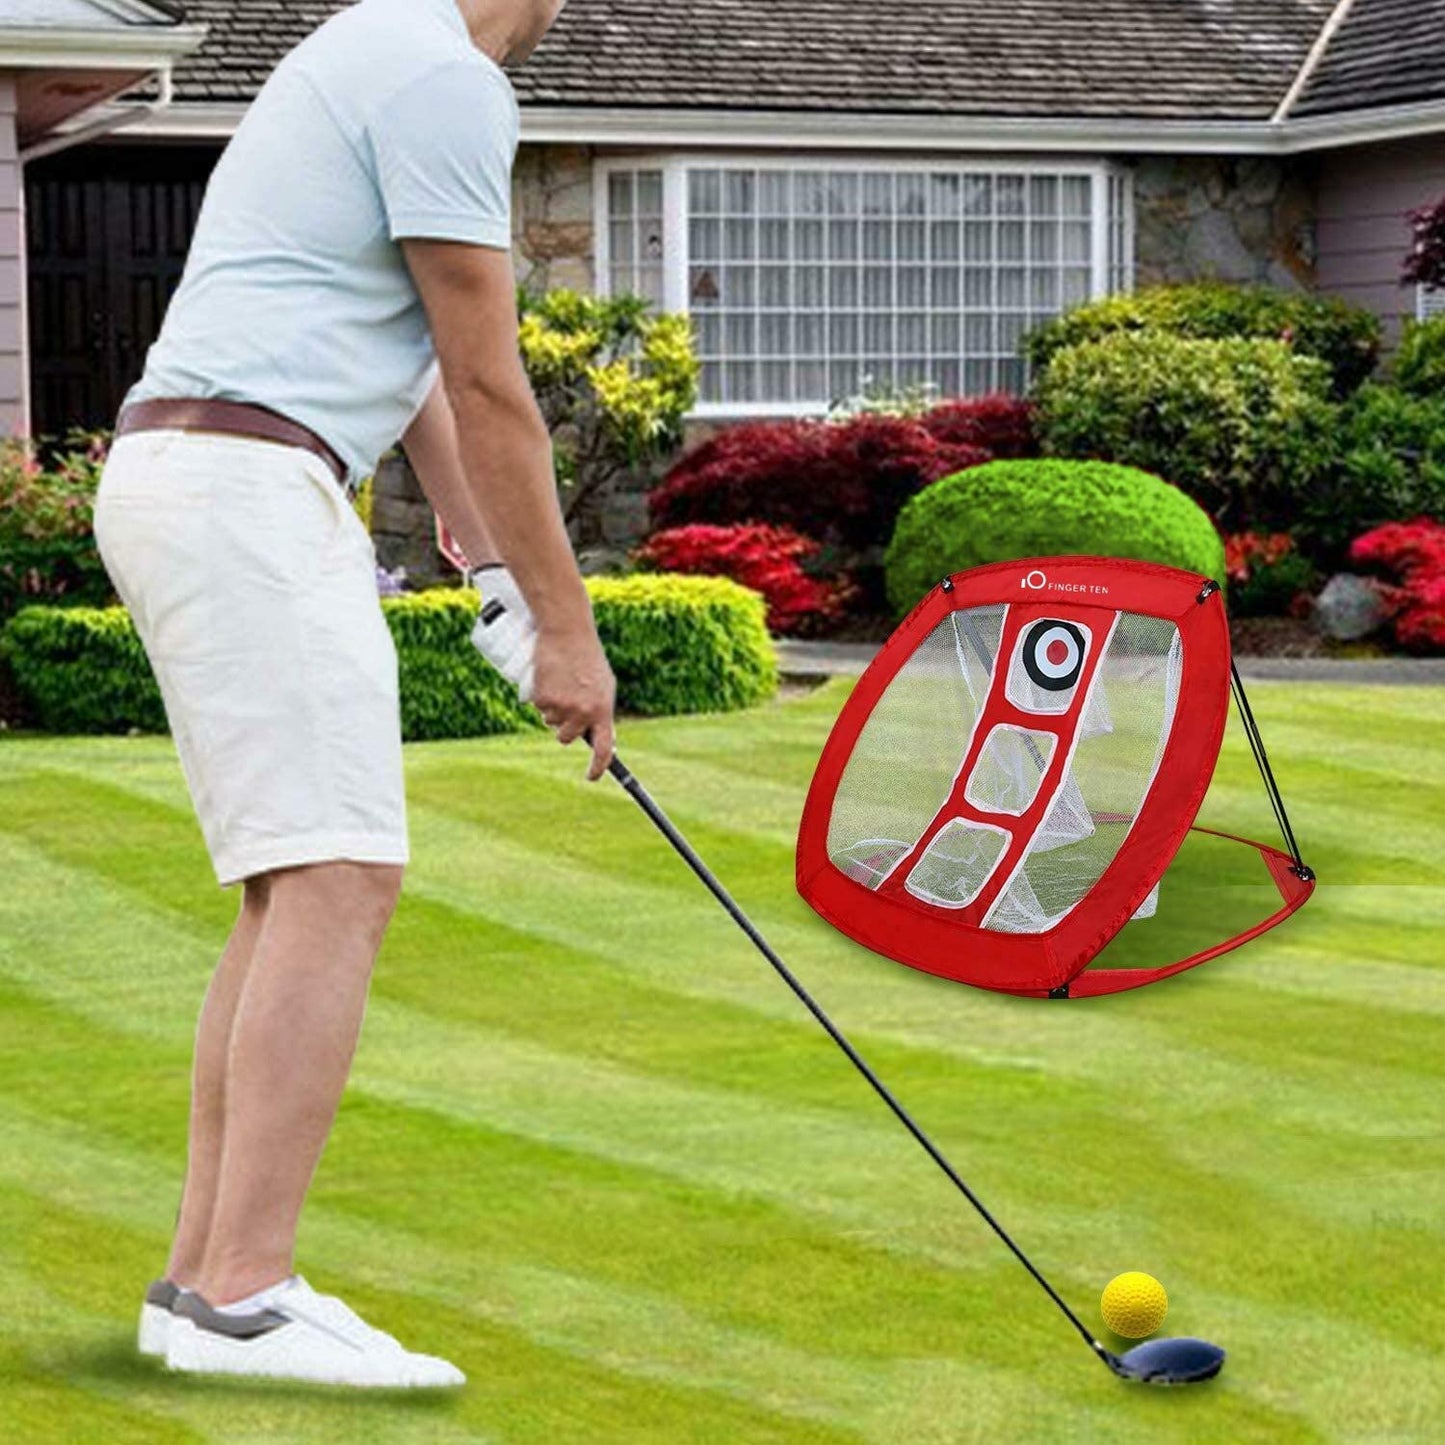 Golf Chipping Net Backyard Indoor Game Set